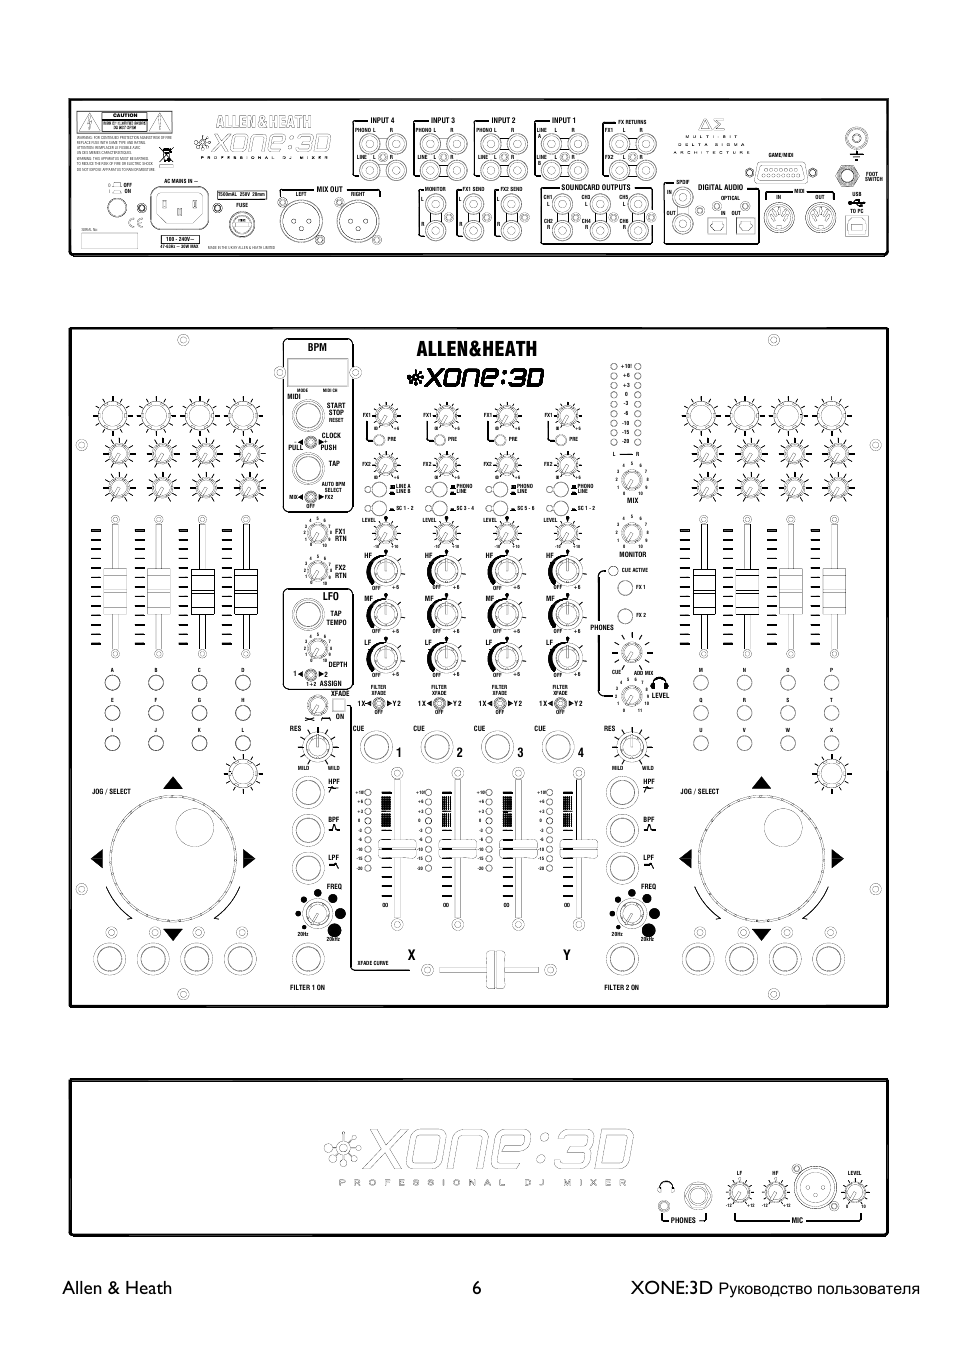 Allen, Heath, Allen & heath 6 xone:3d | XONE 3d_ap6388_1 User Manual | Page 6 / 43